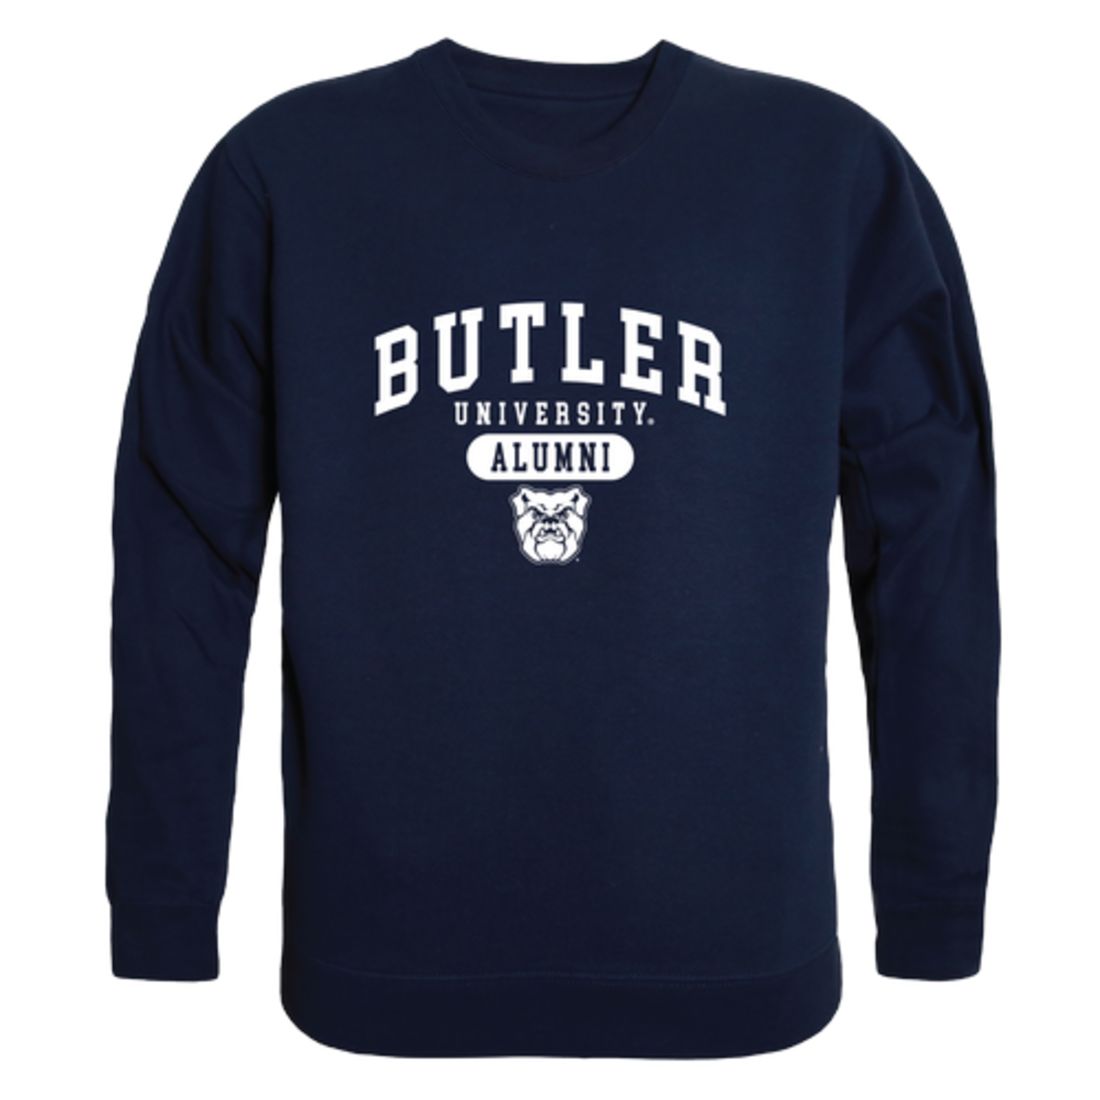 Butler Bulldog Alumni Crewneck Sweatshirt